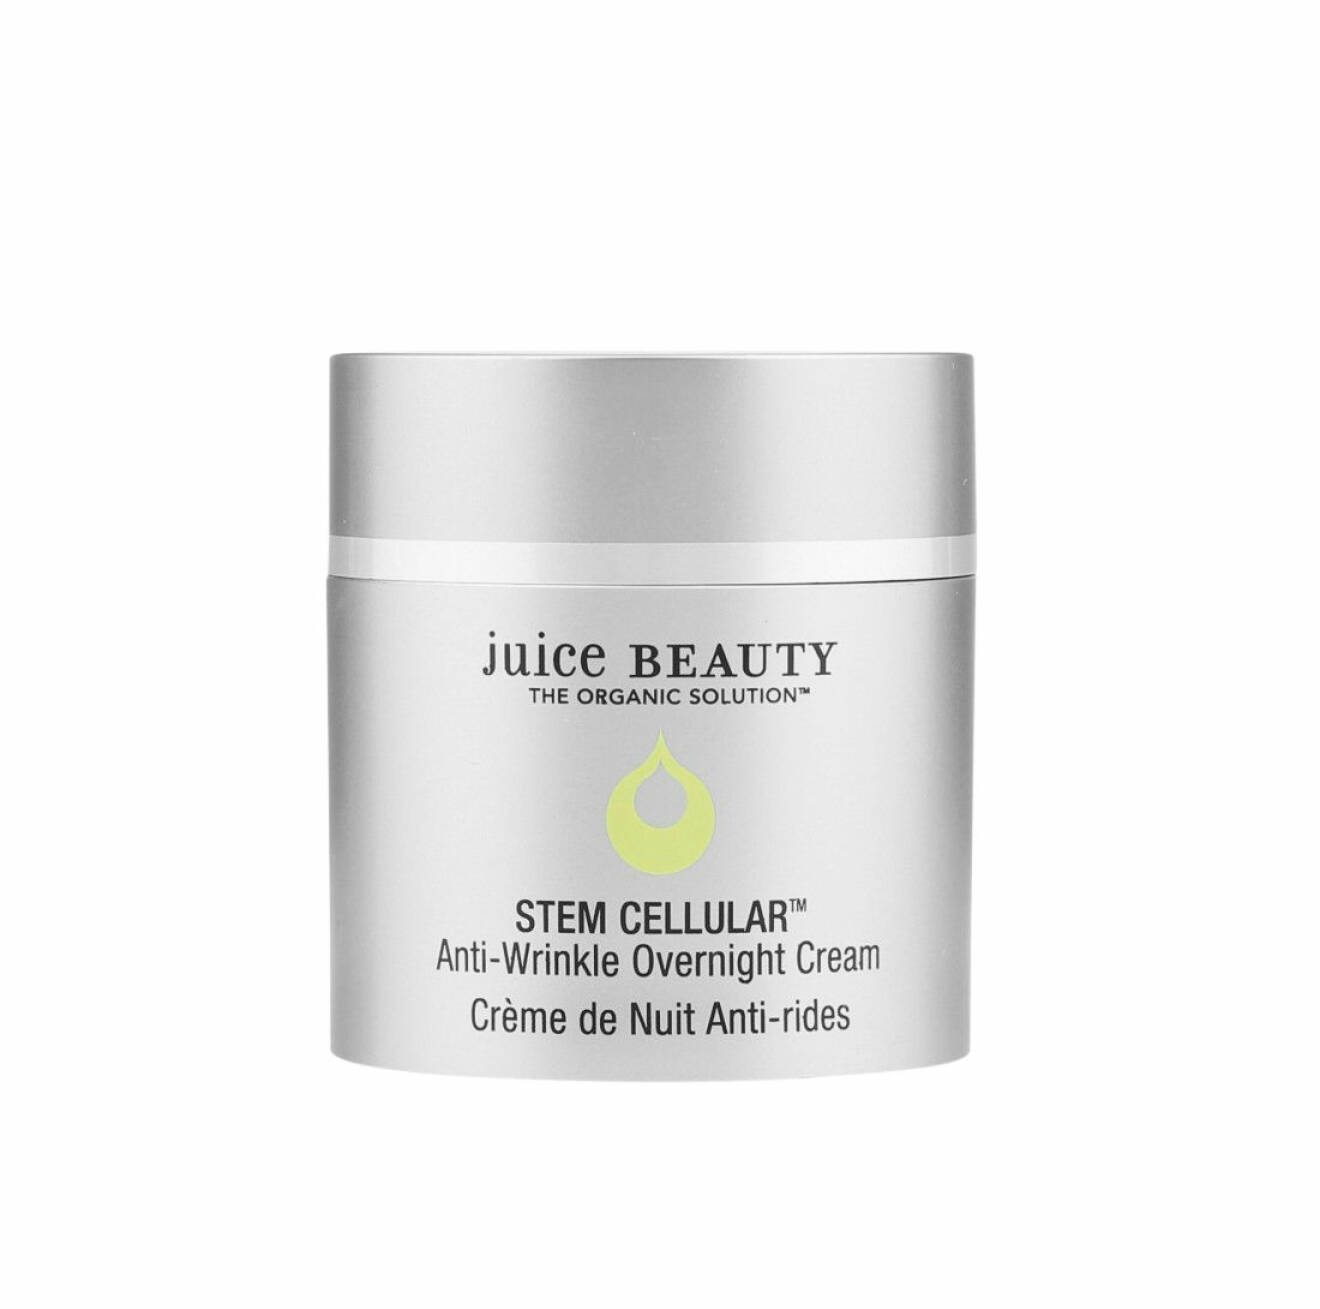 Stem cellular anti-wrinkle overnight cream från Juice Beauty